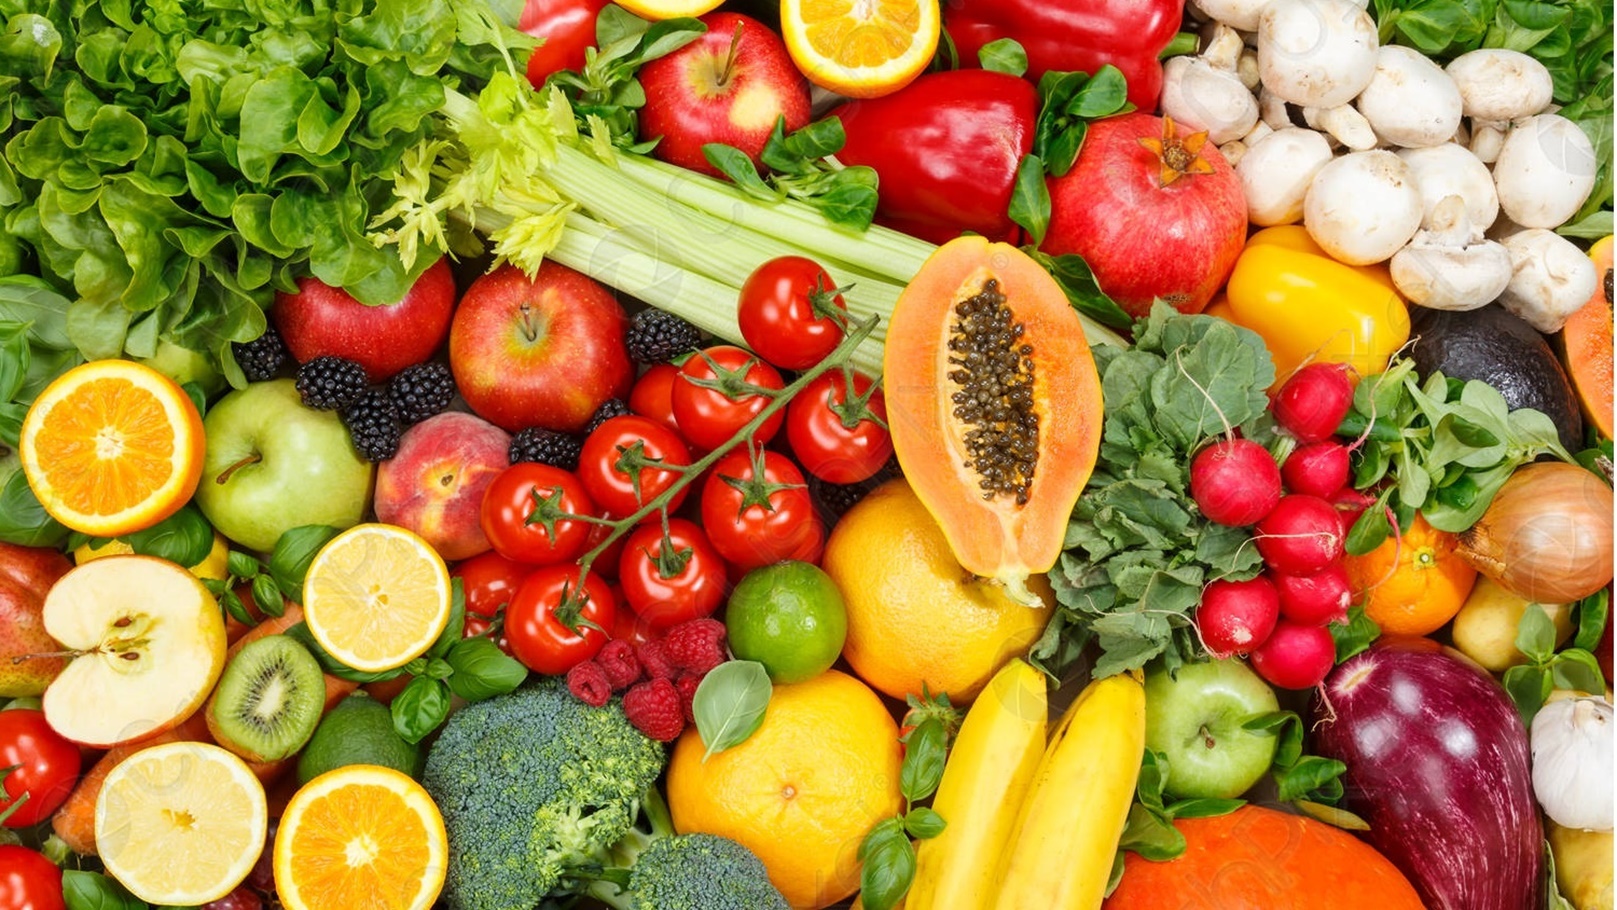 fruits-vegetables-background-food-collection-2872542